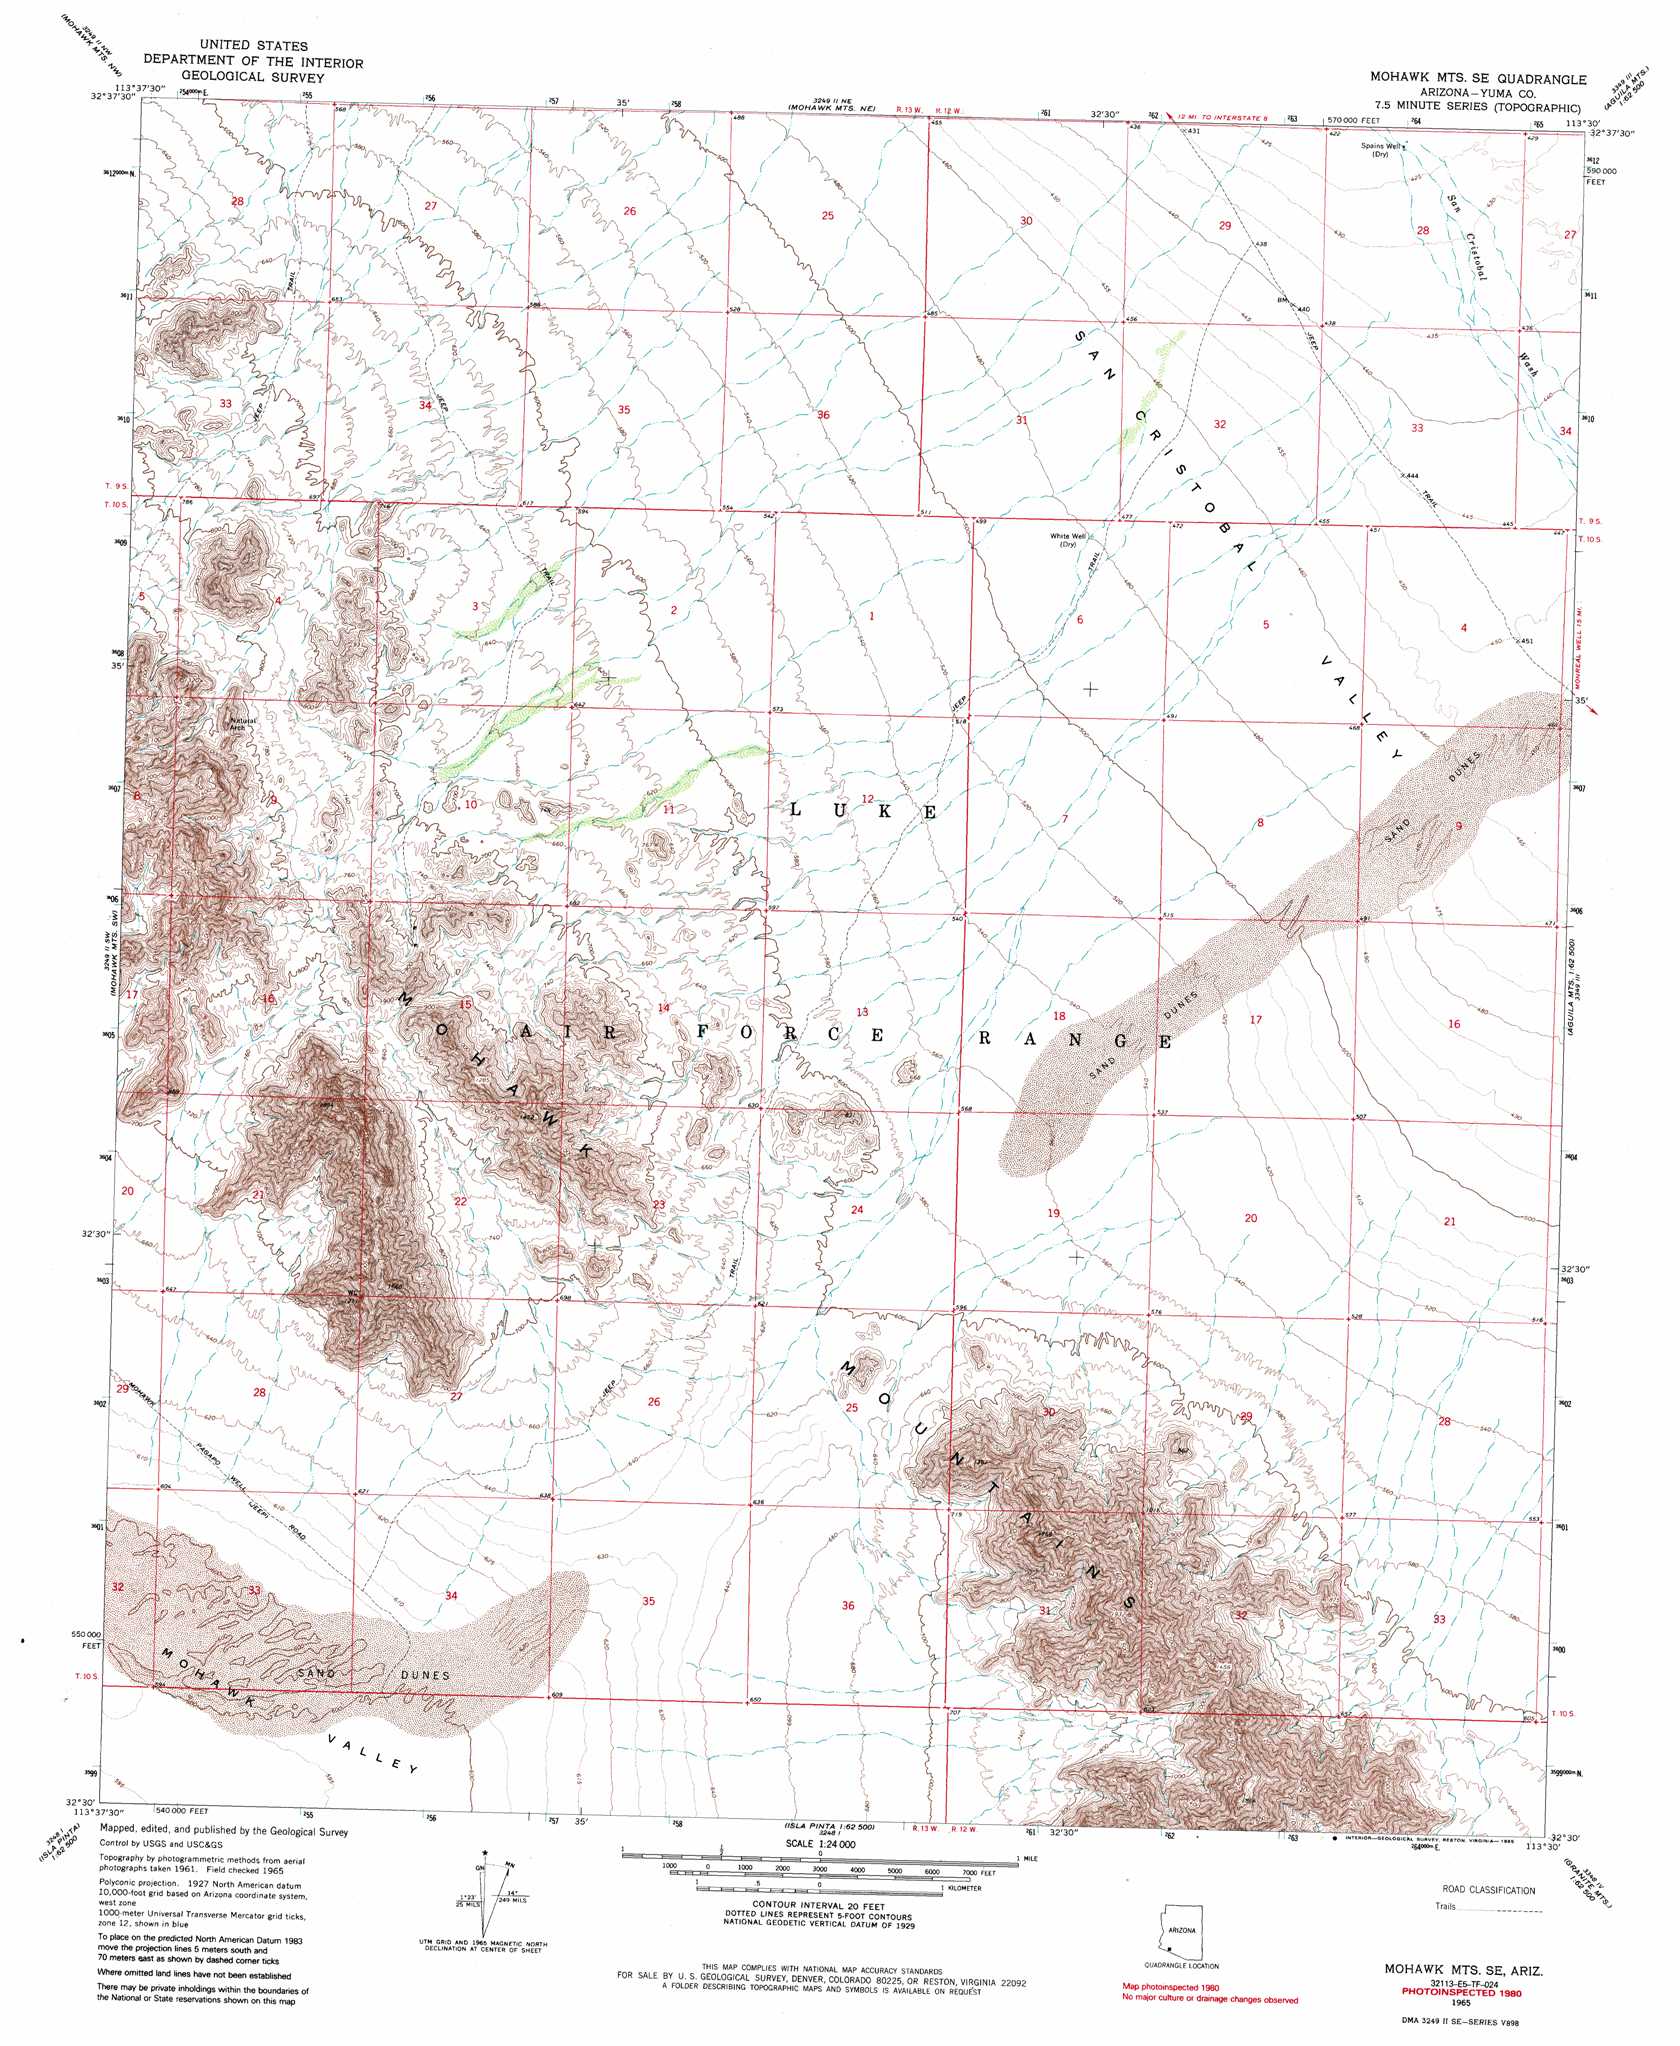 Mohawk Mountains Se topographic map 1:24,000 scale, Arizona